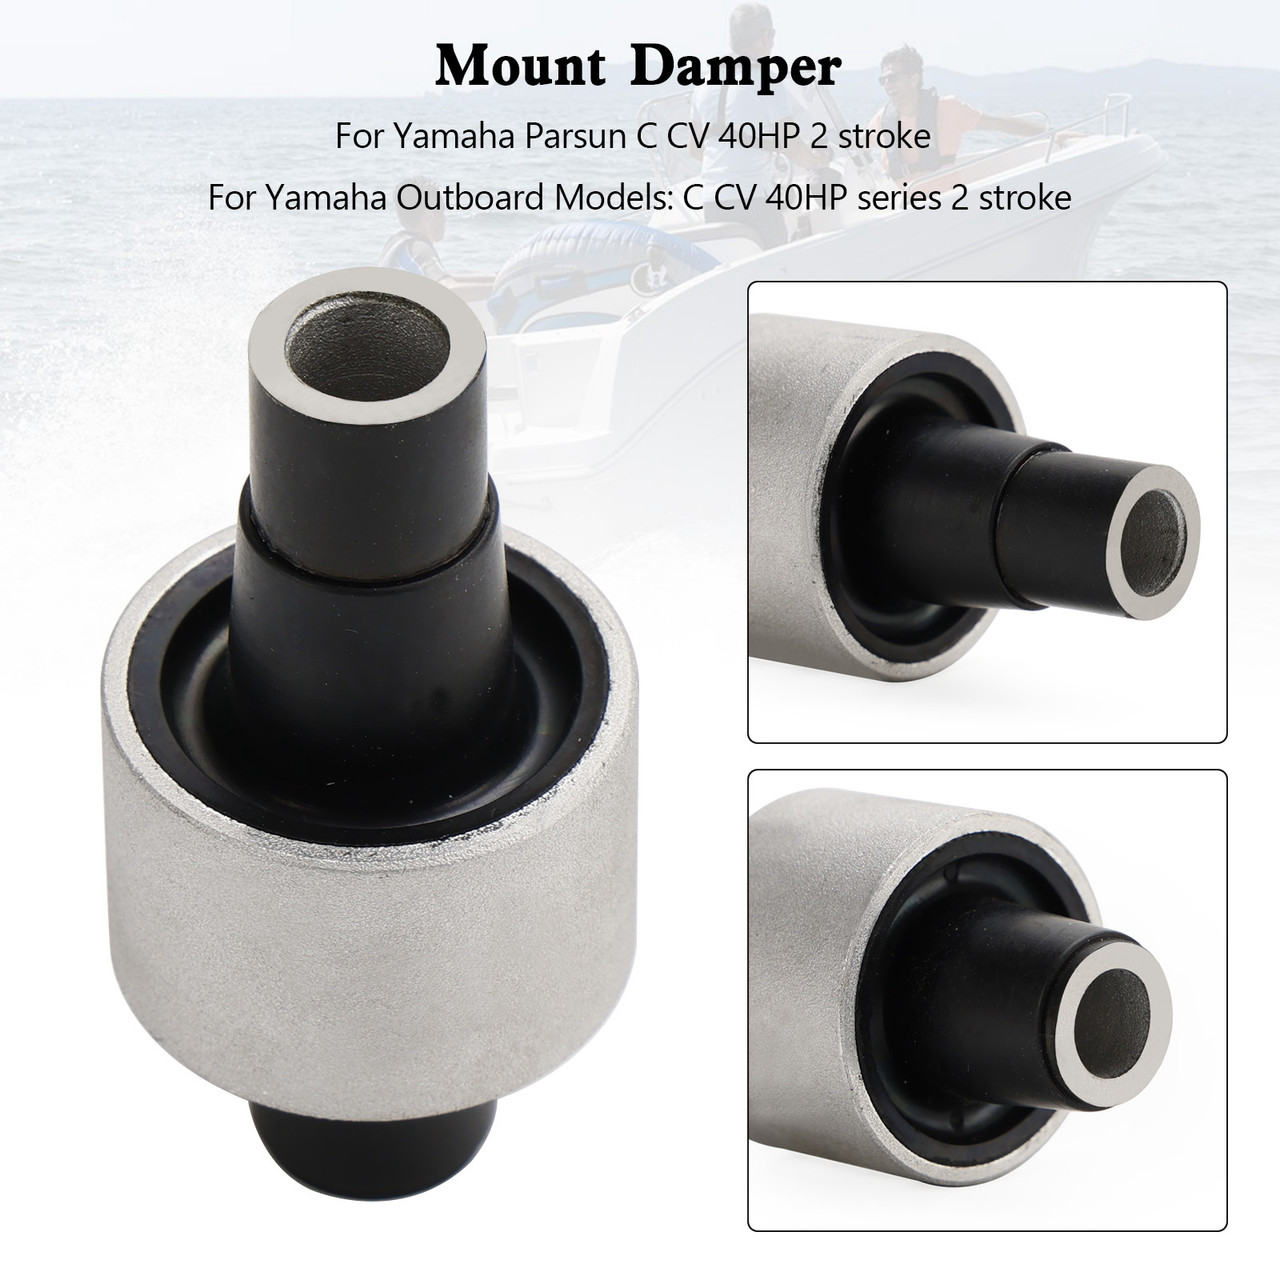 679-44514-00-94 Mount Damper Lower For Yamaha Parsun Outboard 40HP C CV 40 Boat